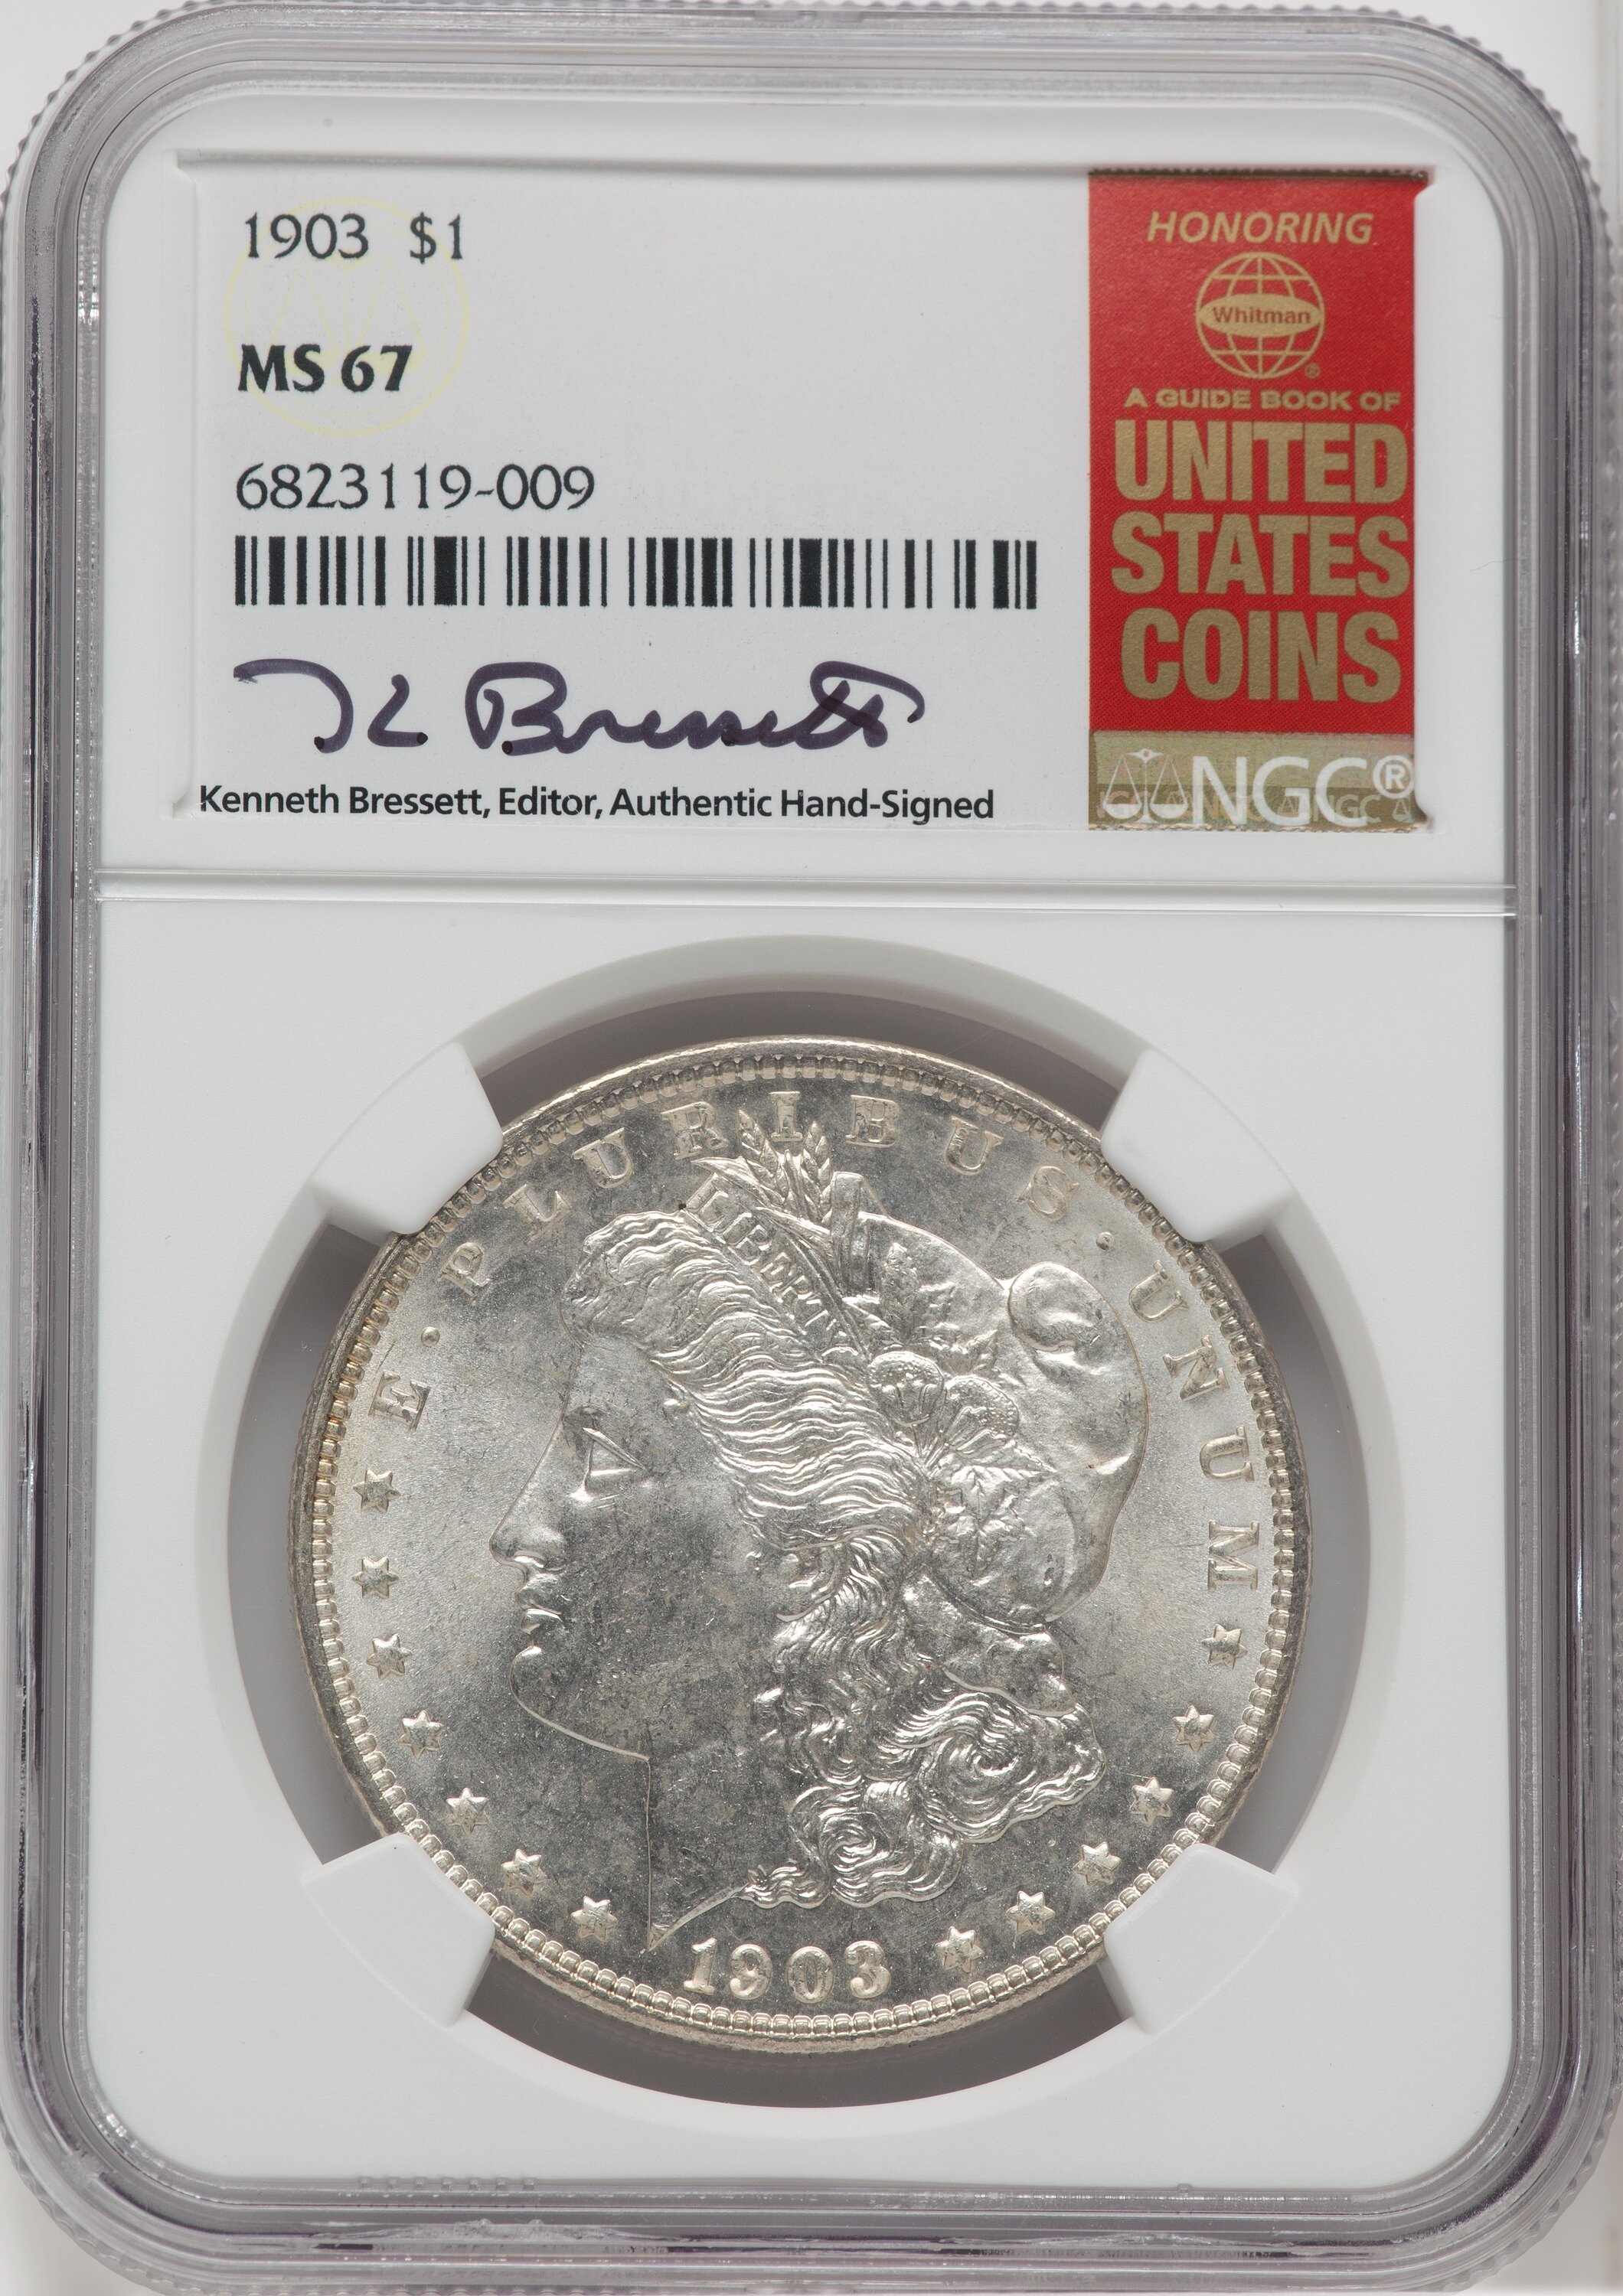 1903 S$1 67 NGC